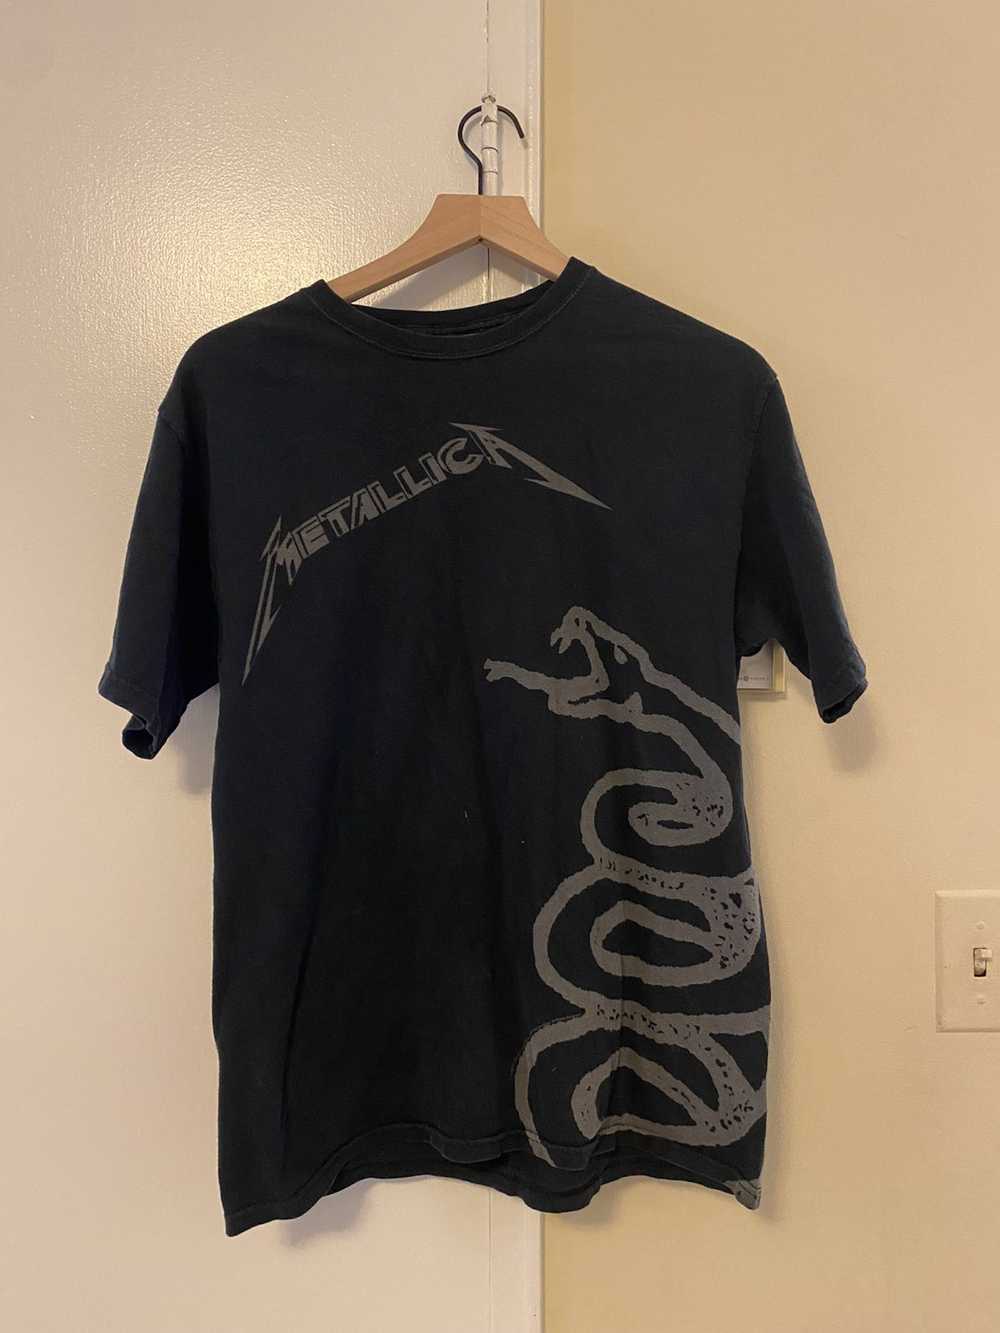 Metallica × Vintage Metallica shirt - image 1